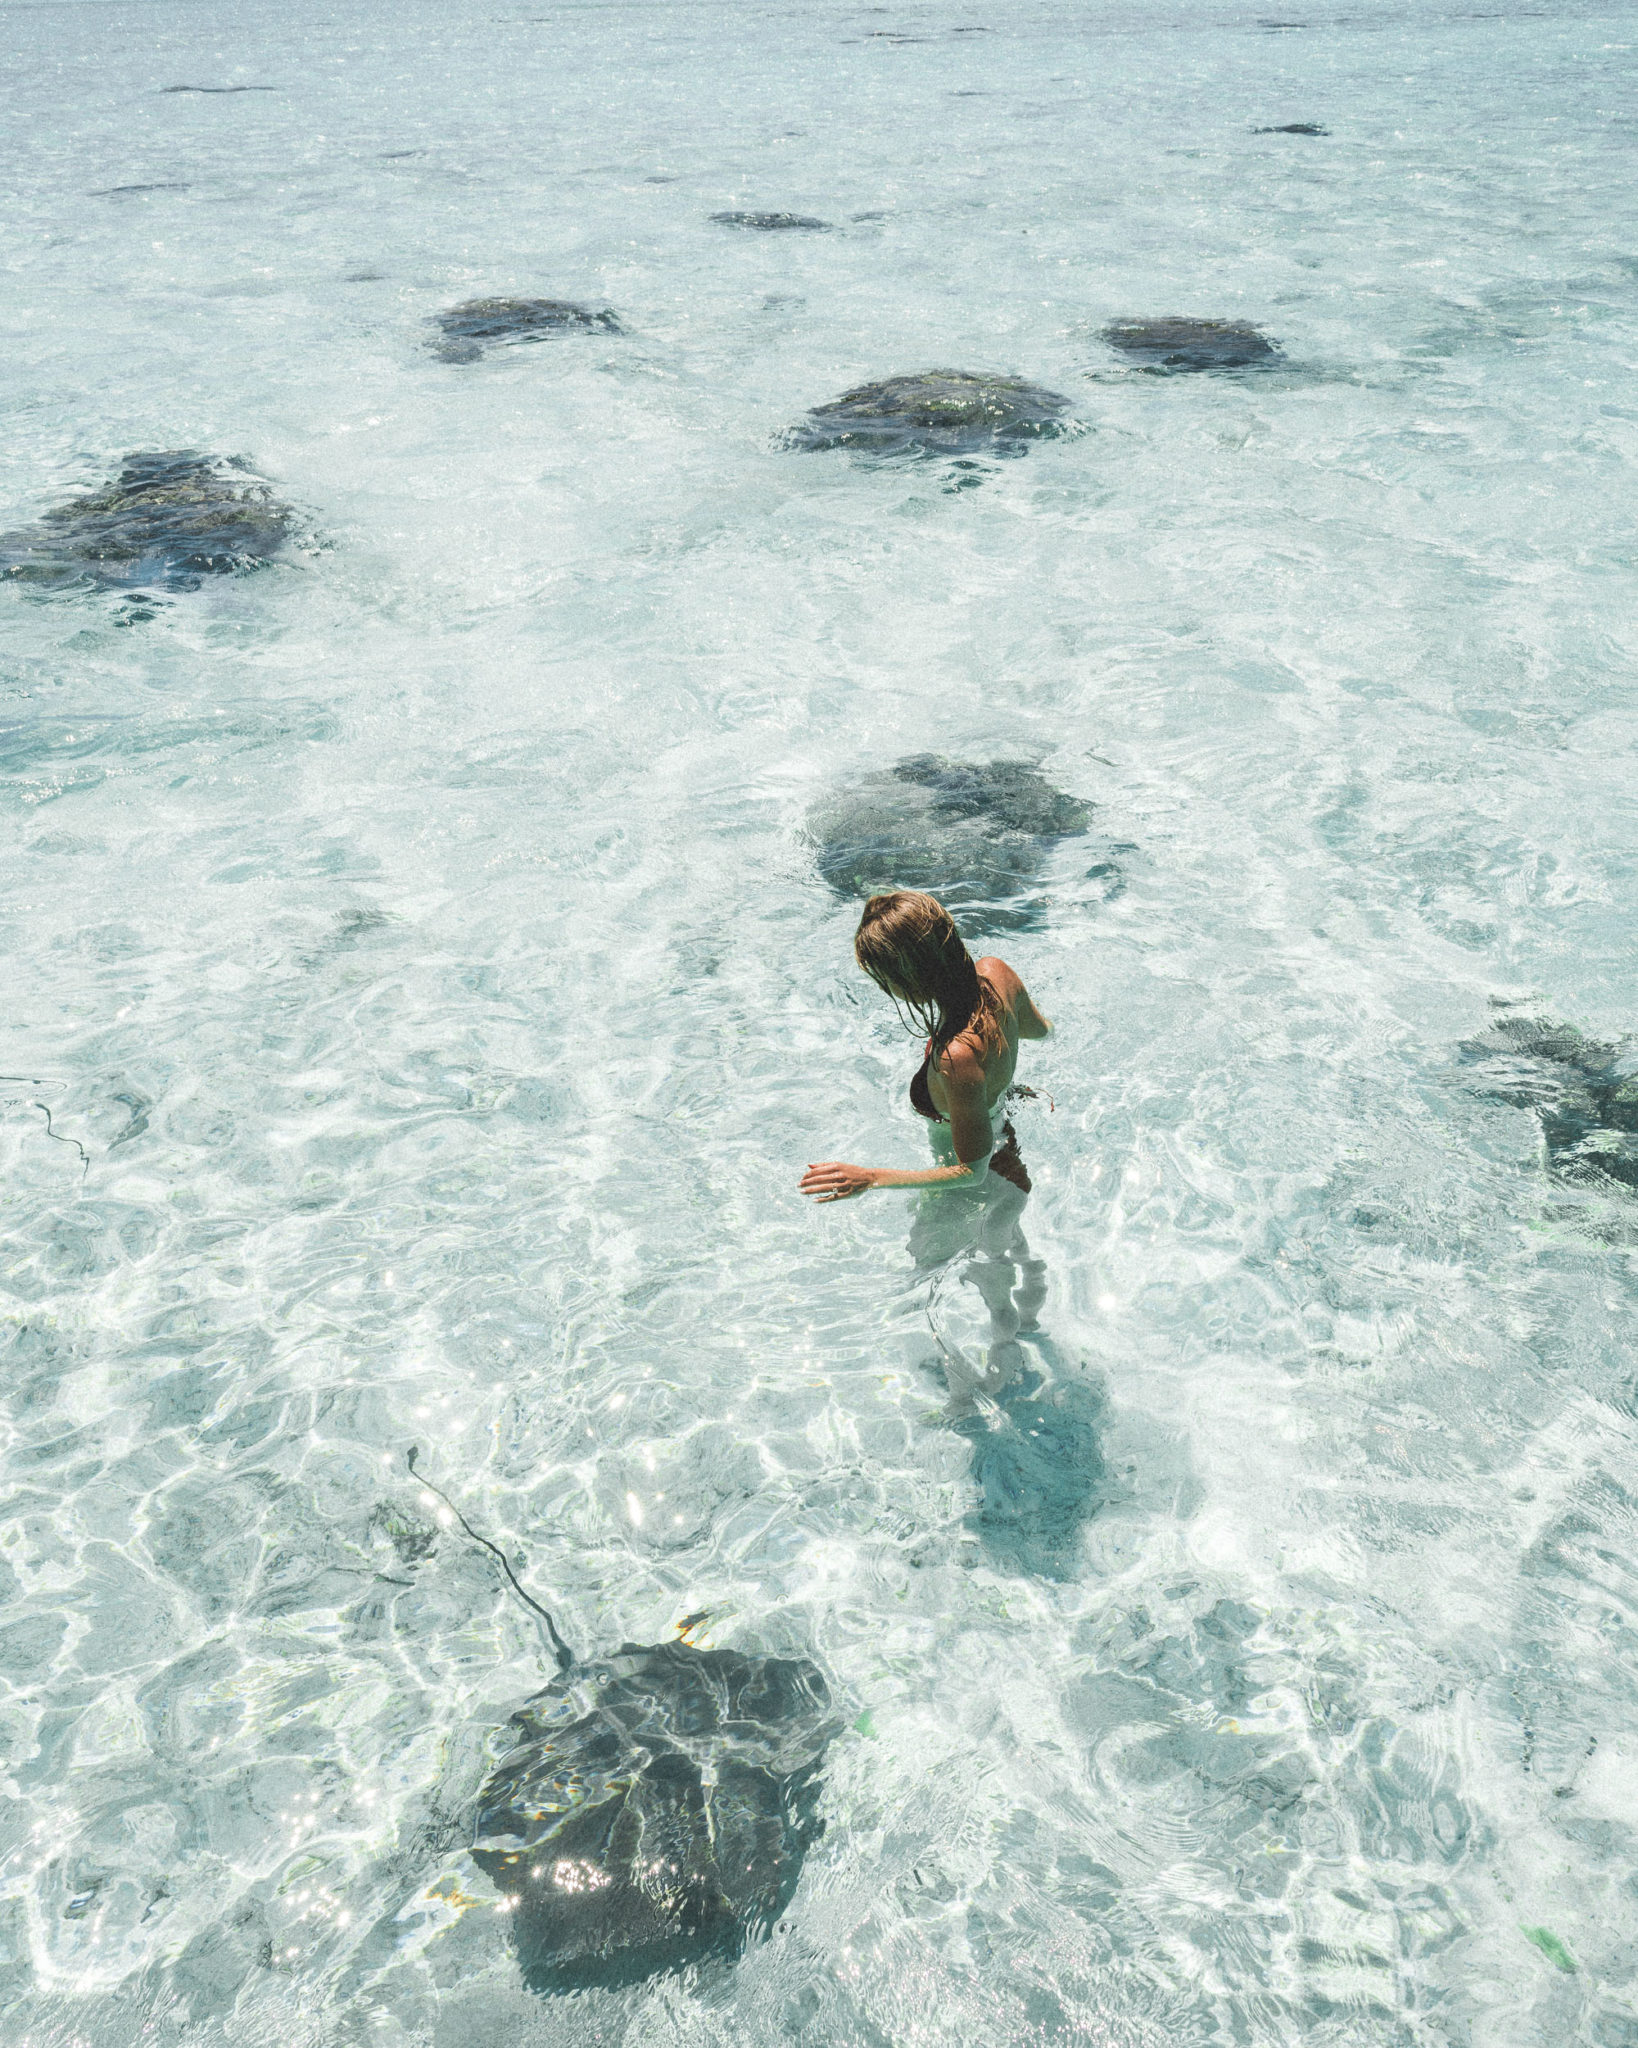 Swimming with sting rays on our honeymoon in bora bora tahiti via @finduslost